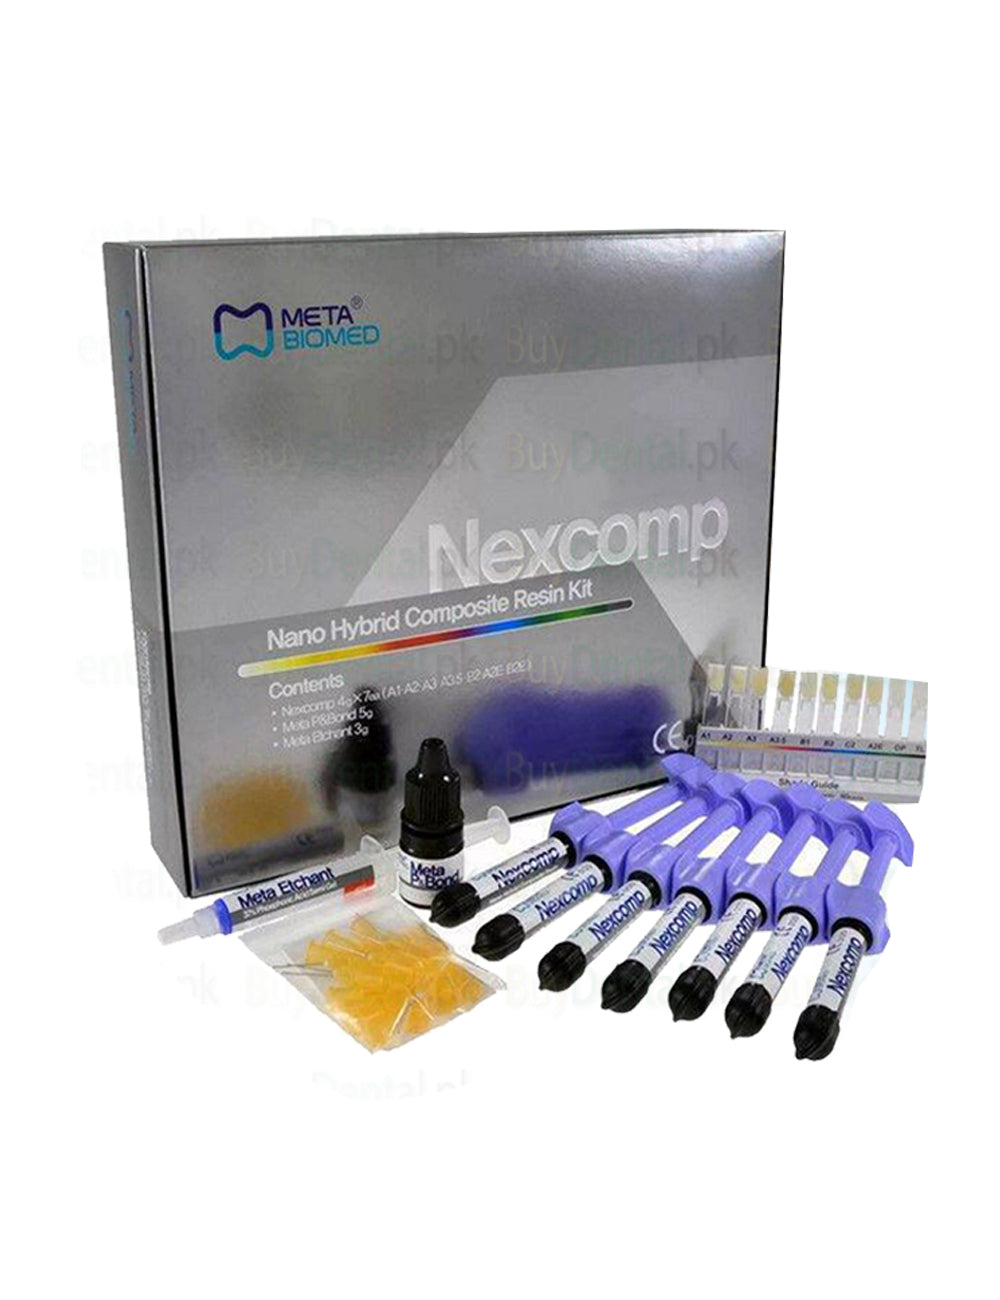 NEXCOMP- COMPOSITE RESIN KIT by META BIOMED - Meta Biomed Nexcomp Nano Hybrid Composite Kit in Pakistan